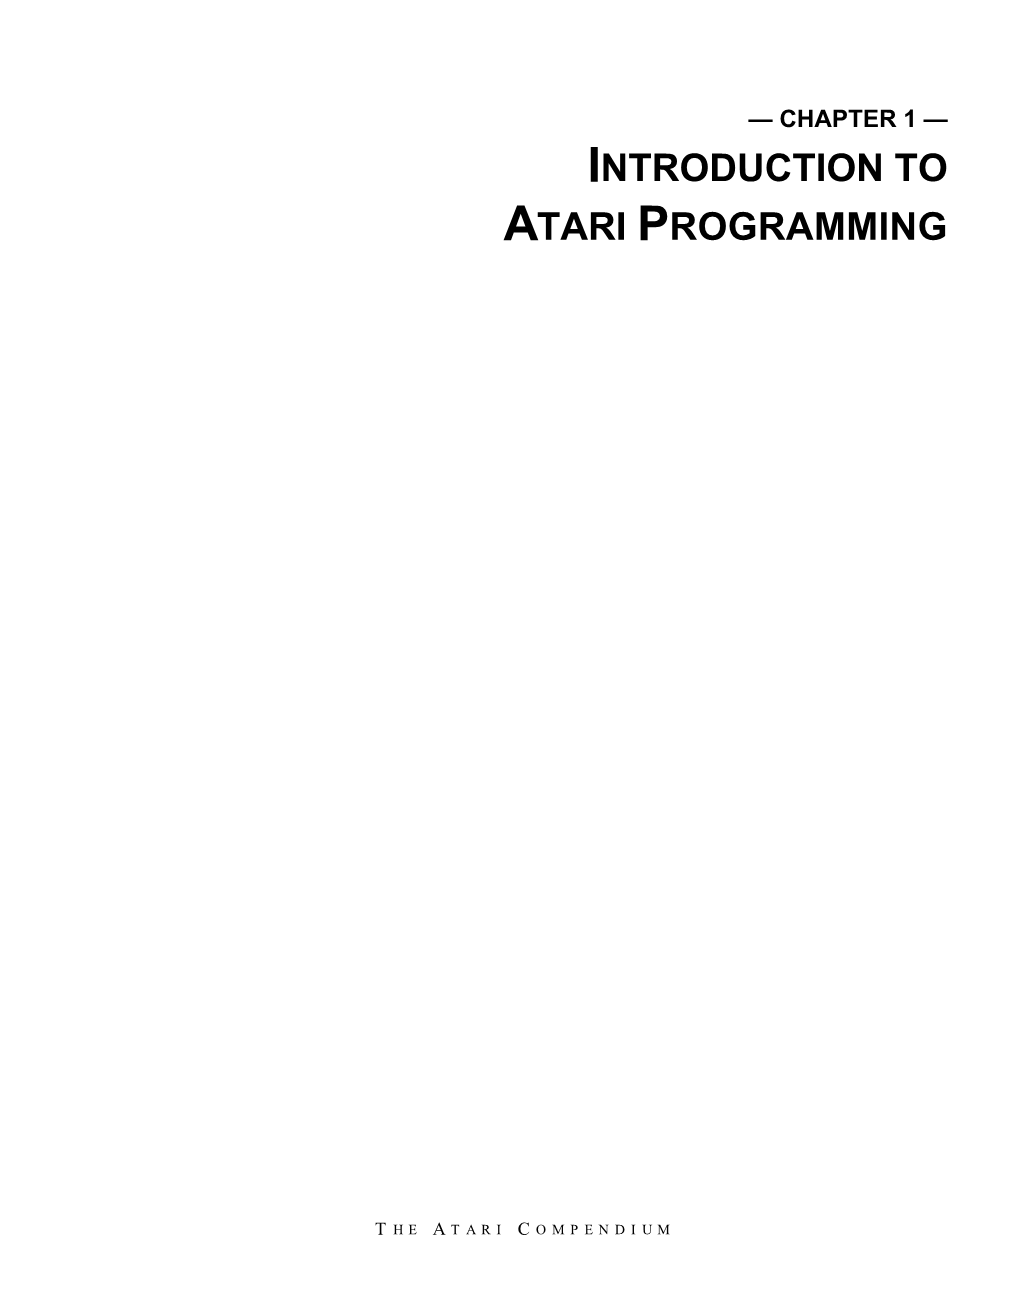 Introduction to Atari Programming